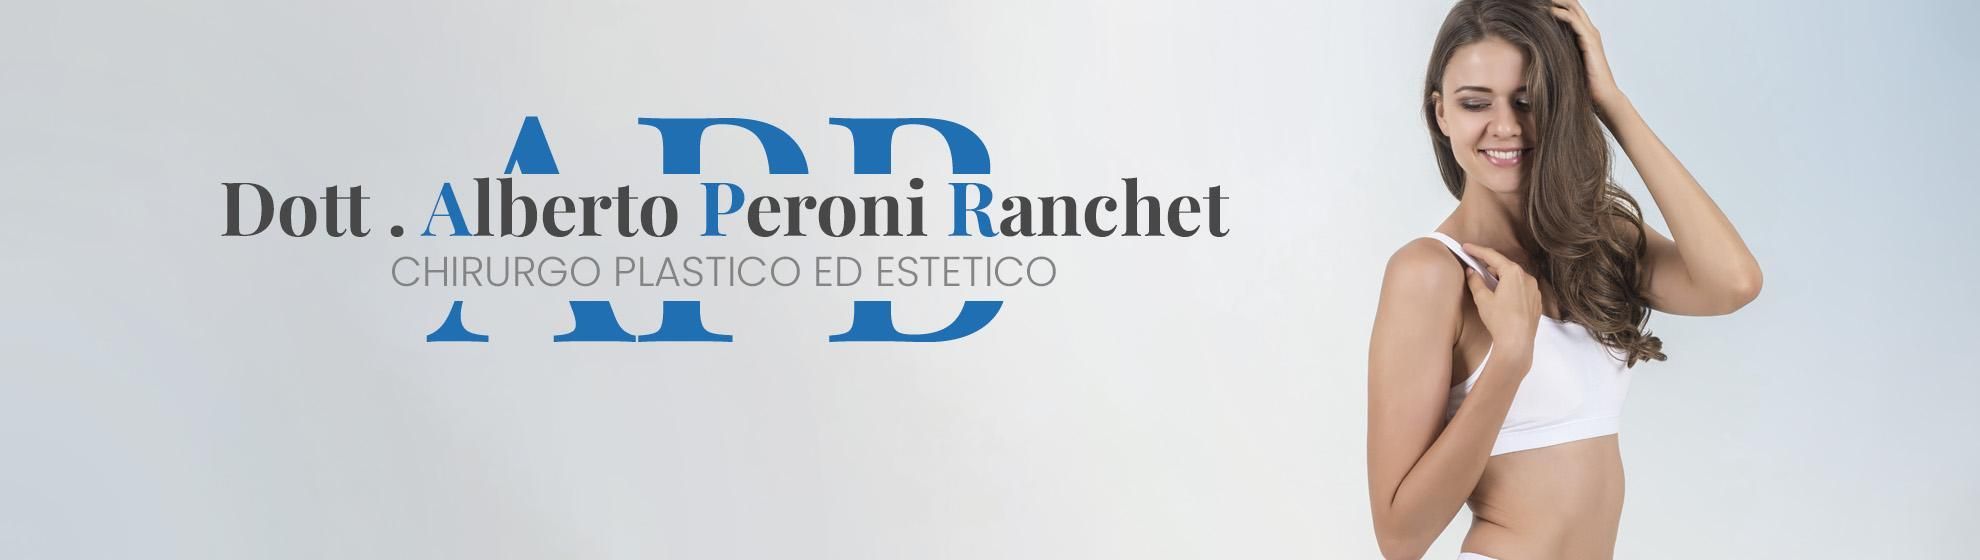 Dr. Alberto Peroni Ranchet